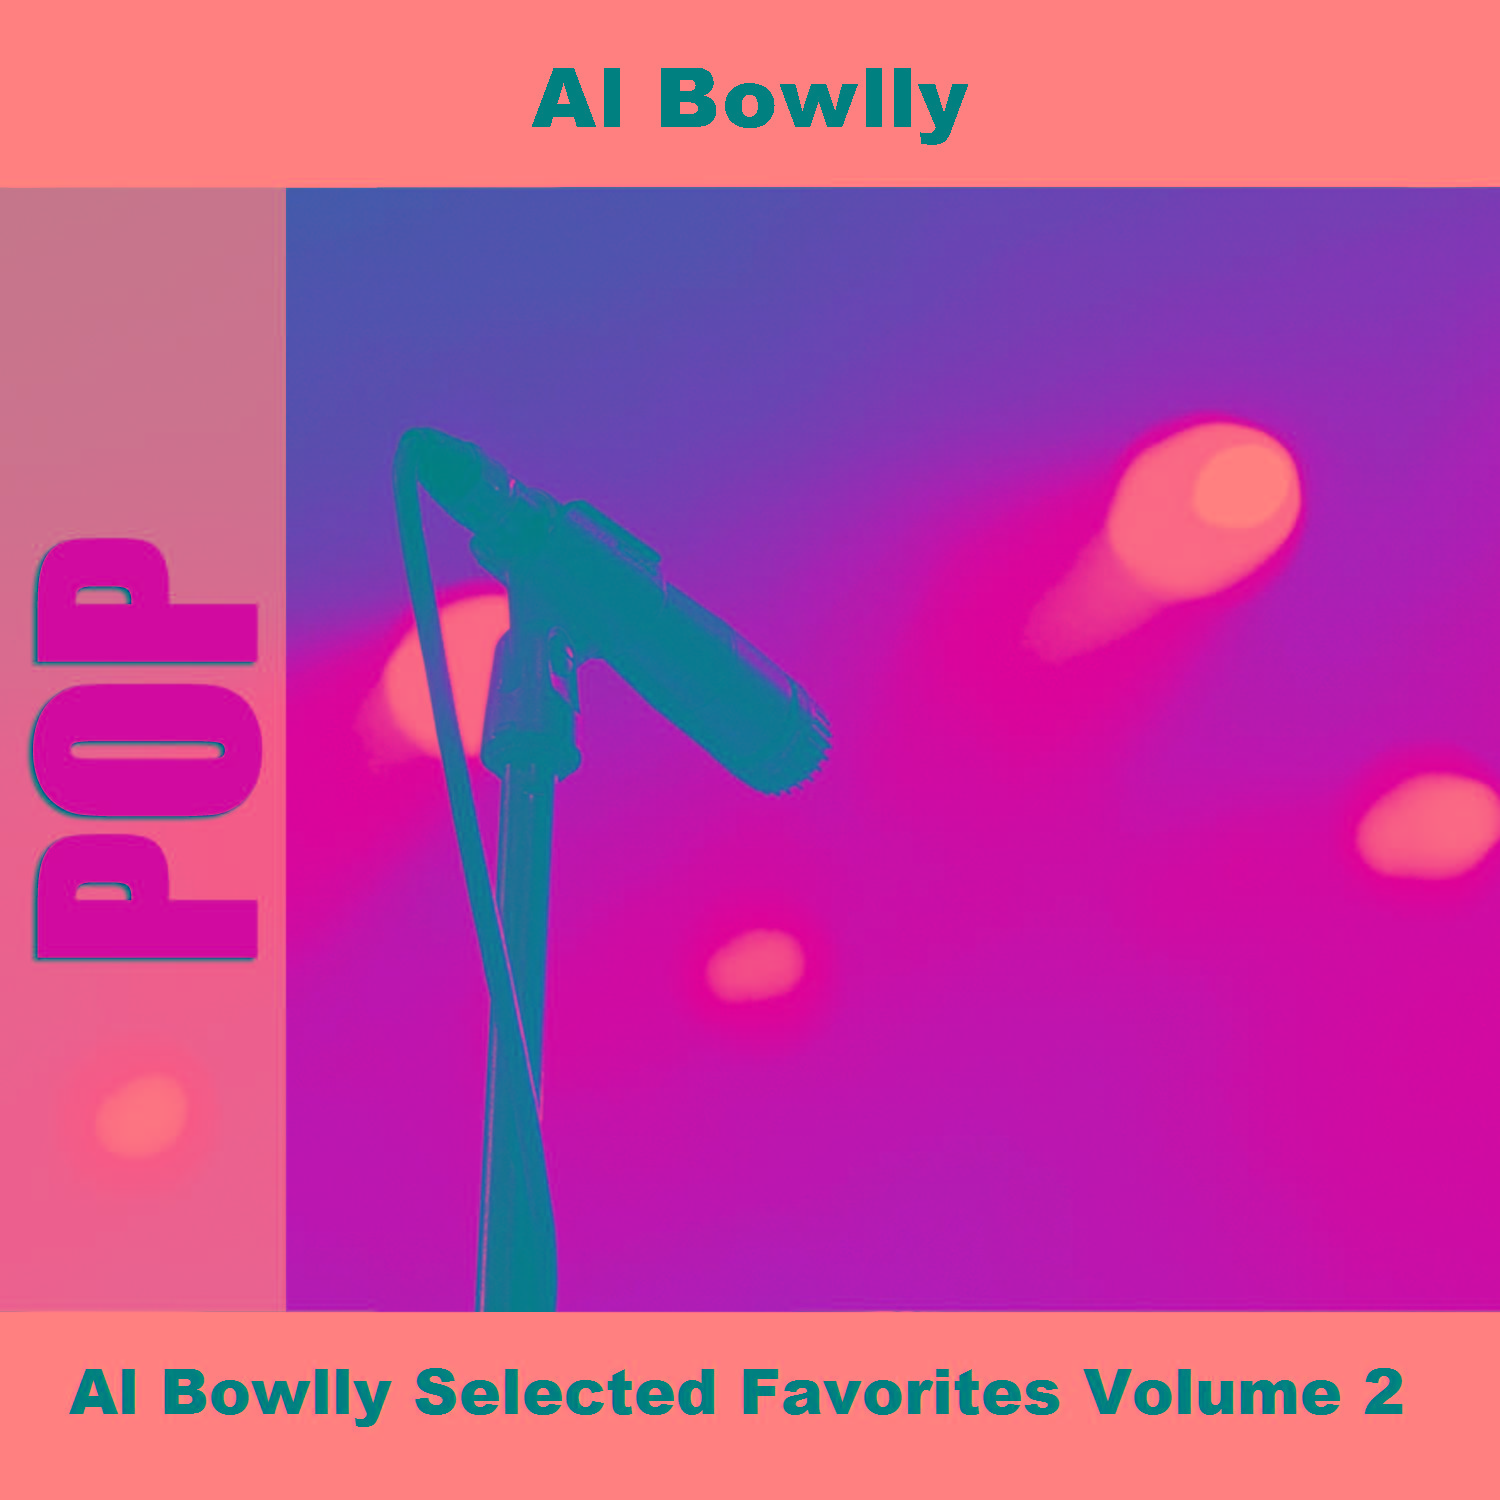 Al Bowlly Selected Favorites Volume 2